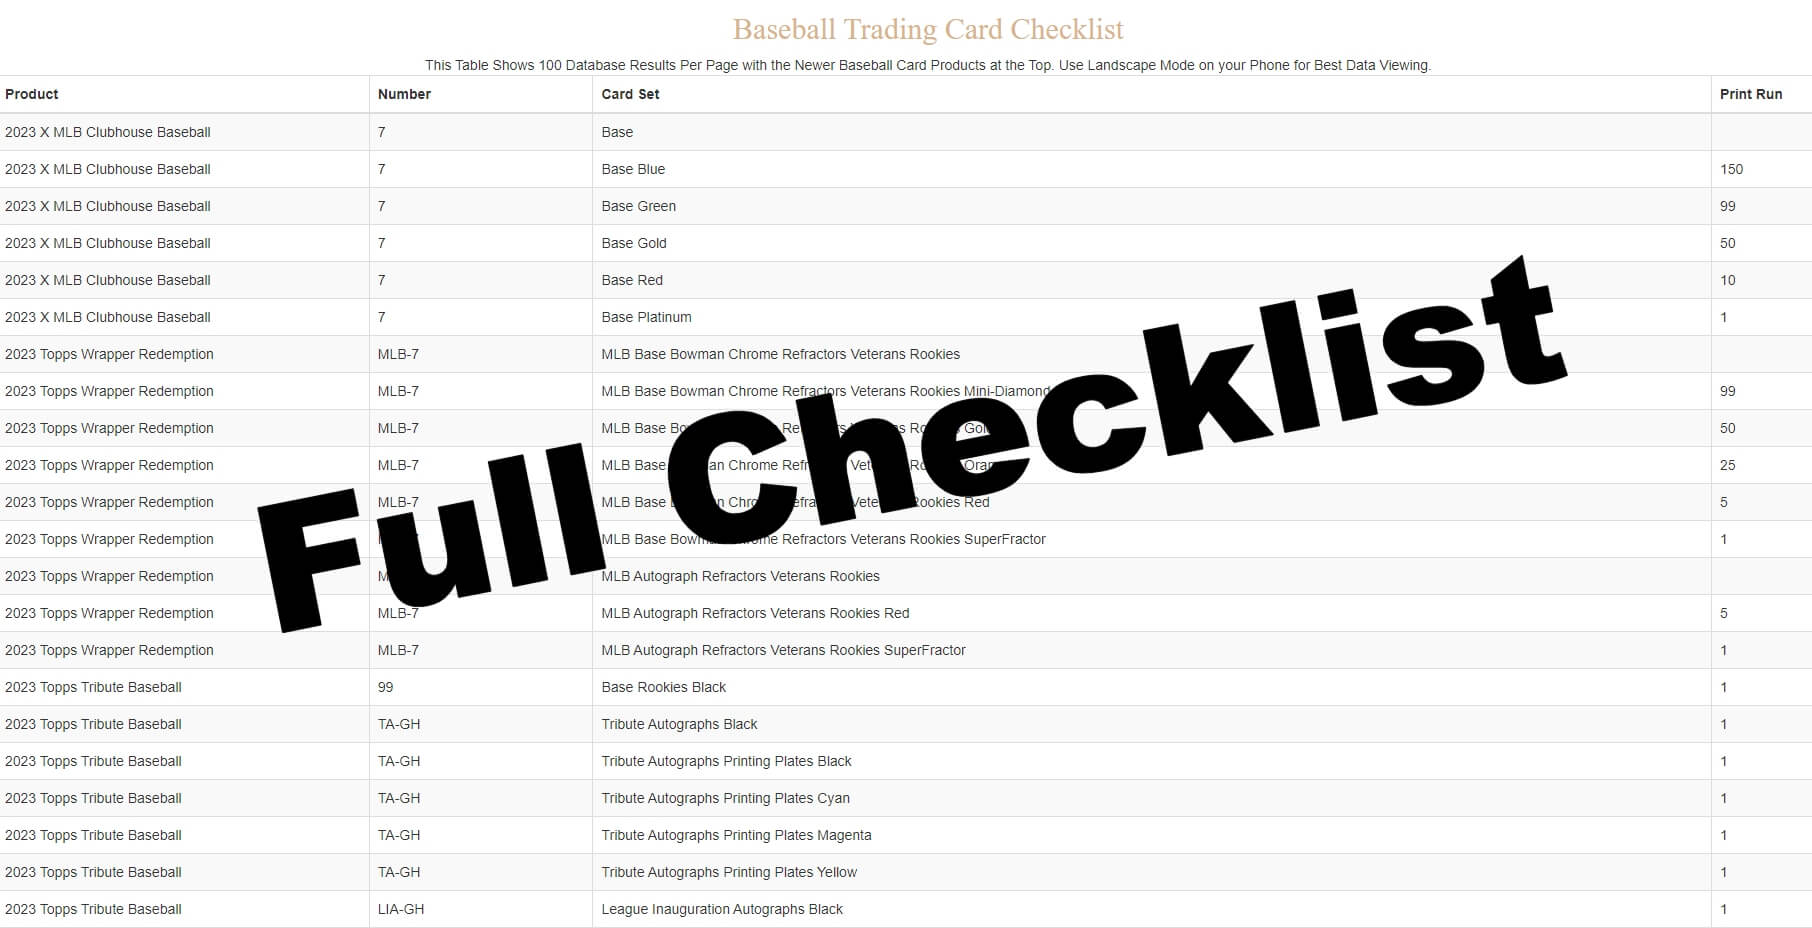 Full Checklist of Trading Cards